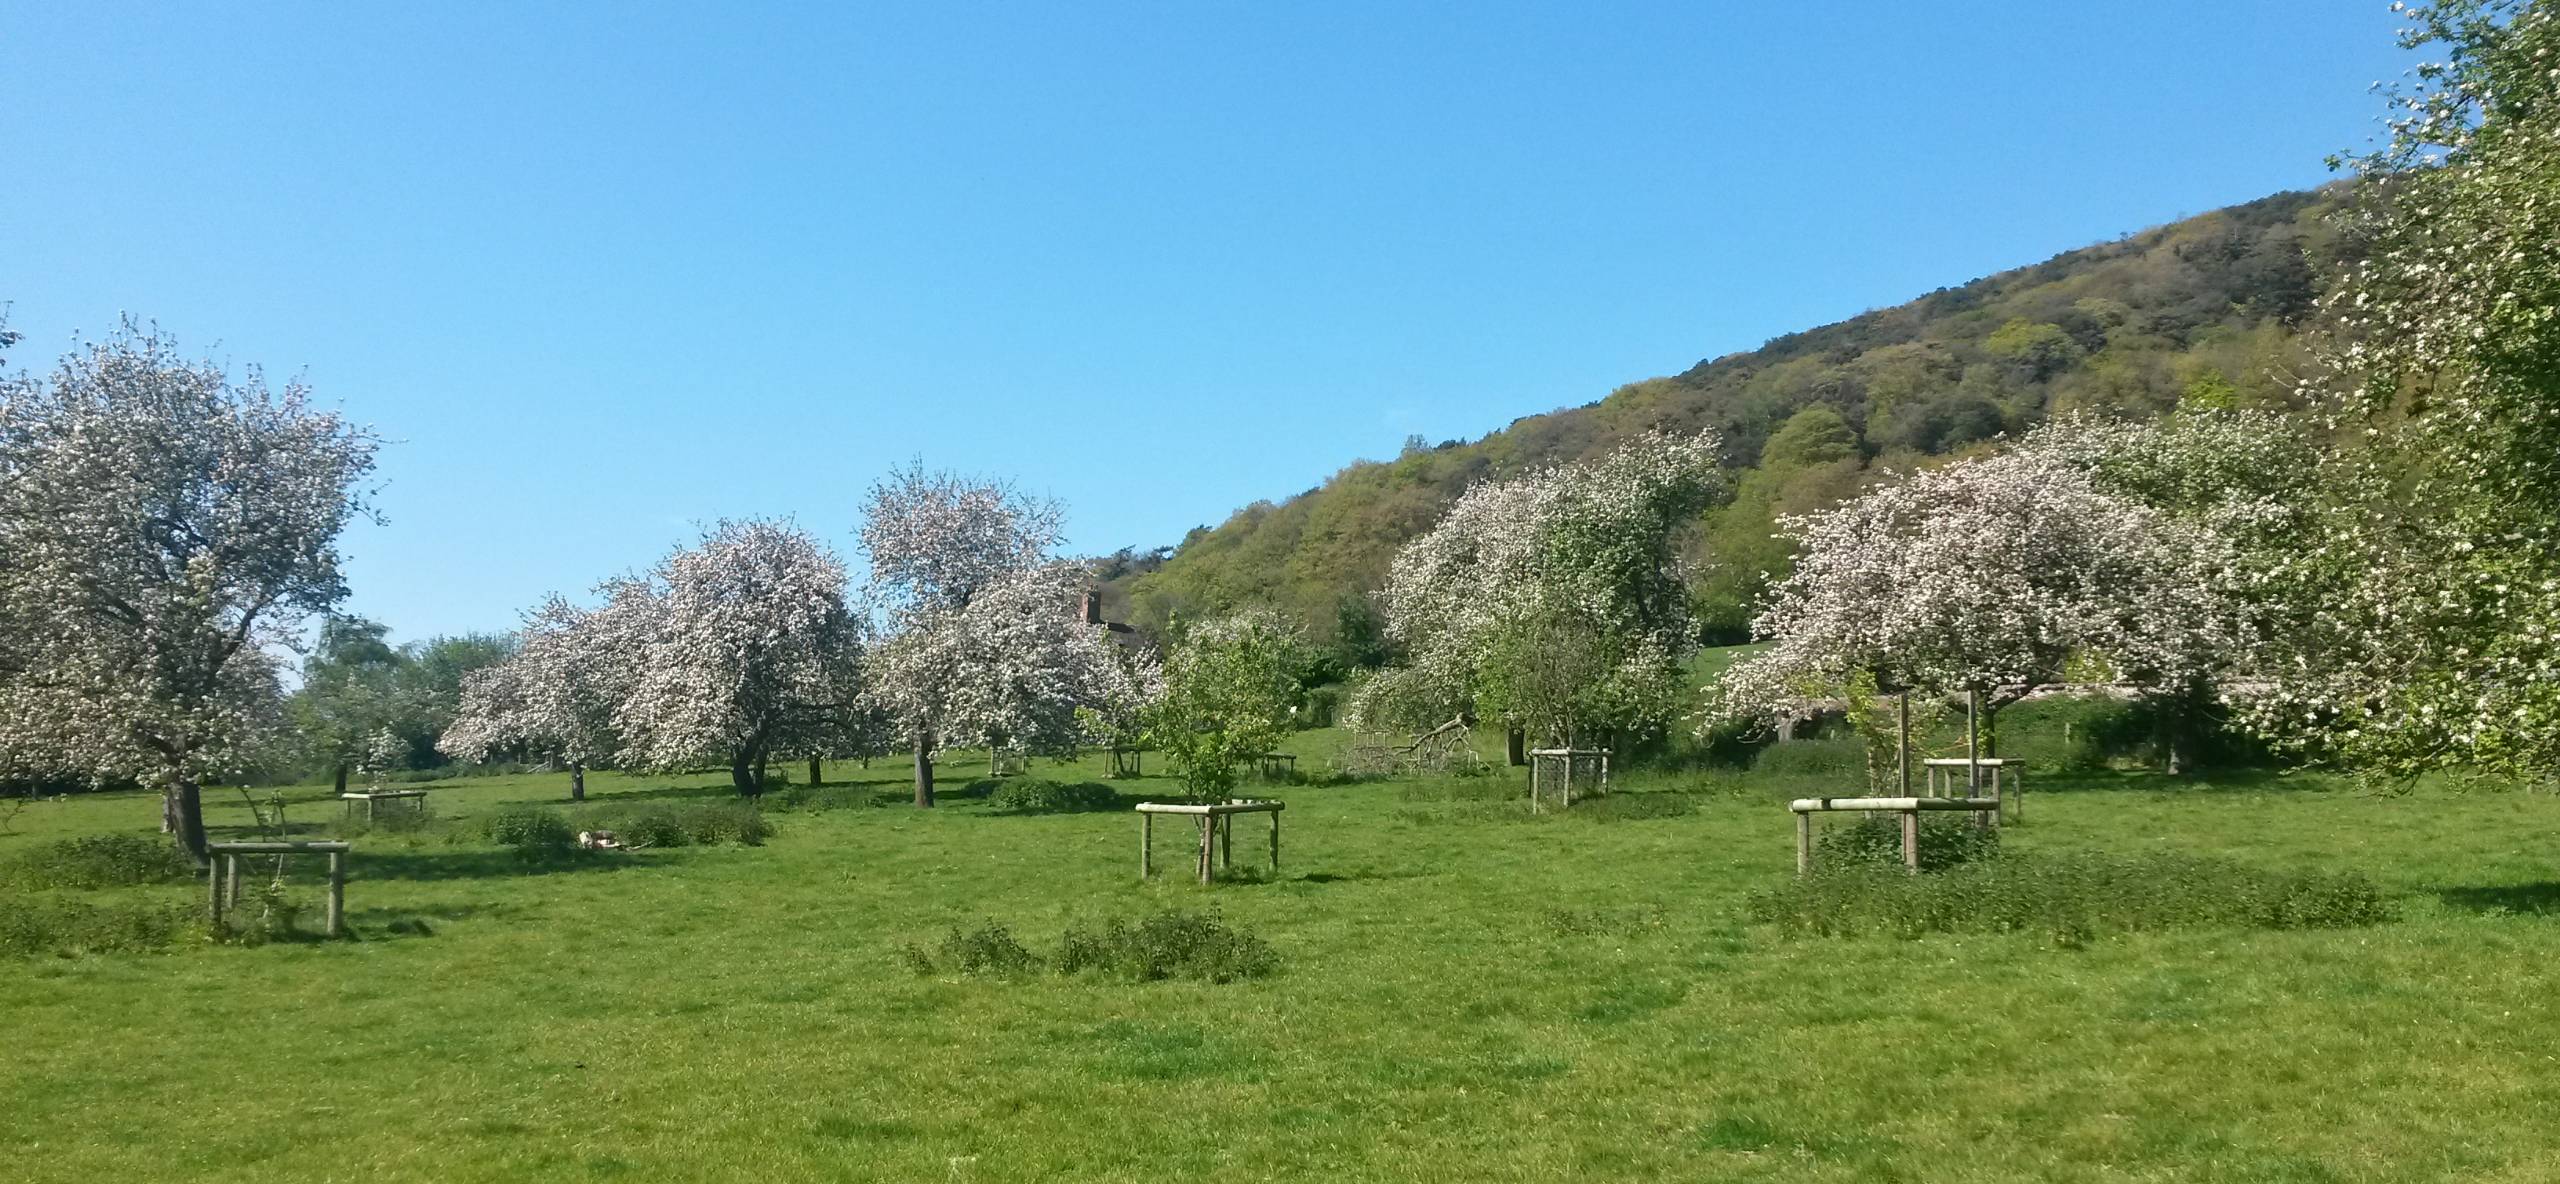 Porlock orchard in bloom